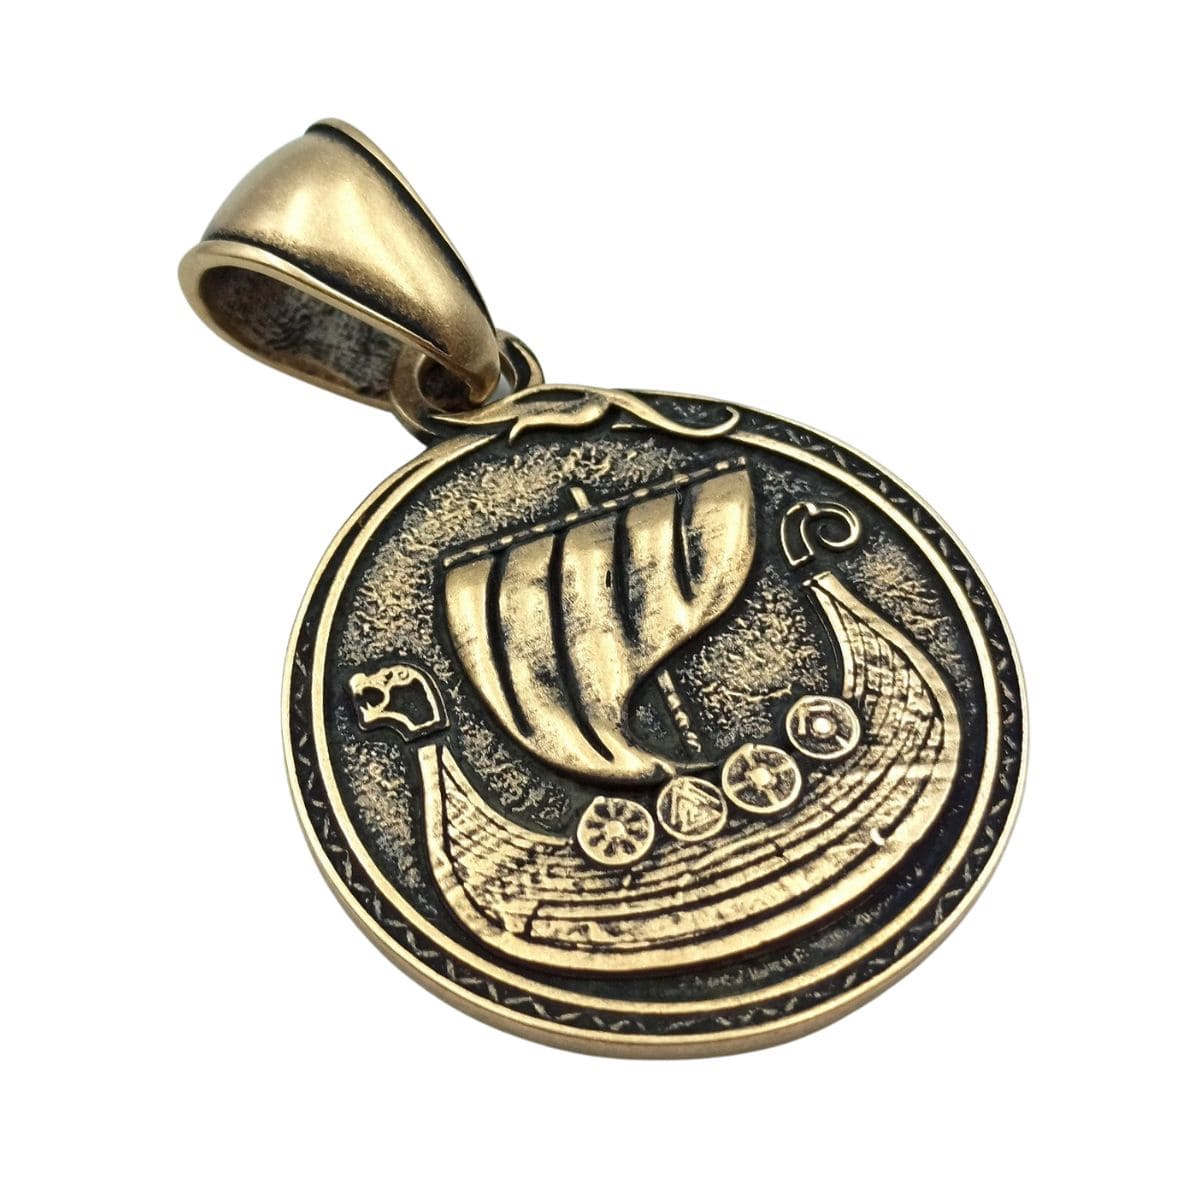 Viking long ship bronze pendant with Vegvisir rune